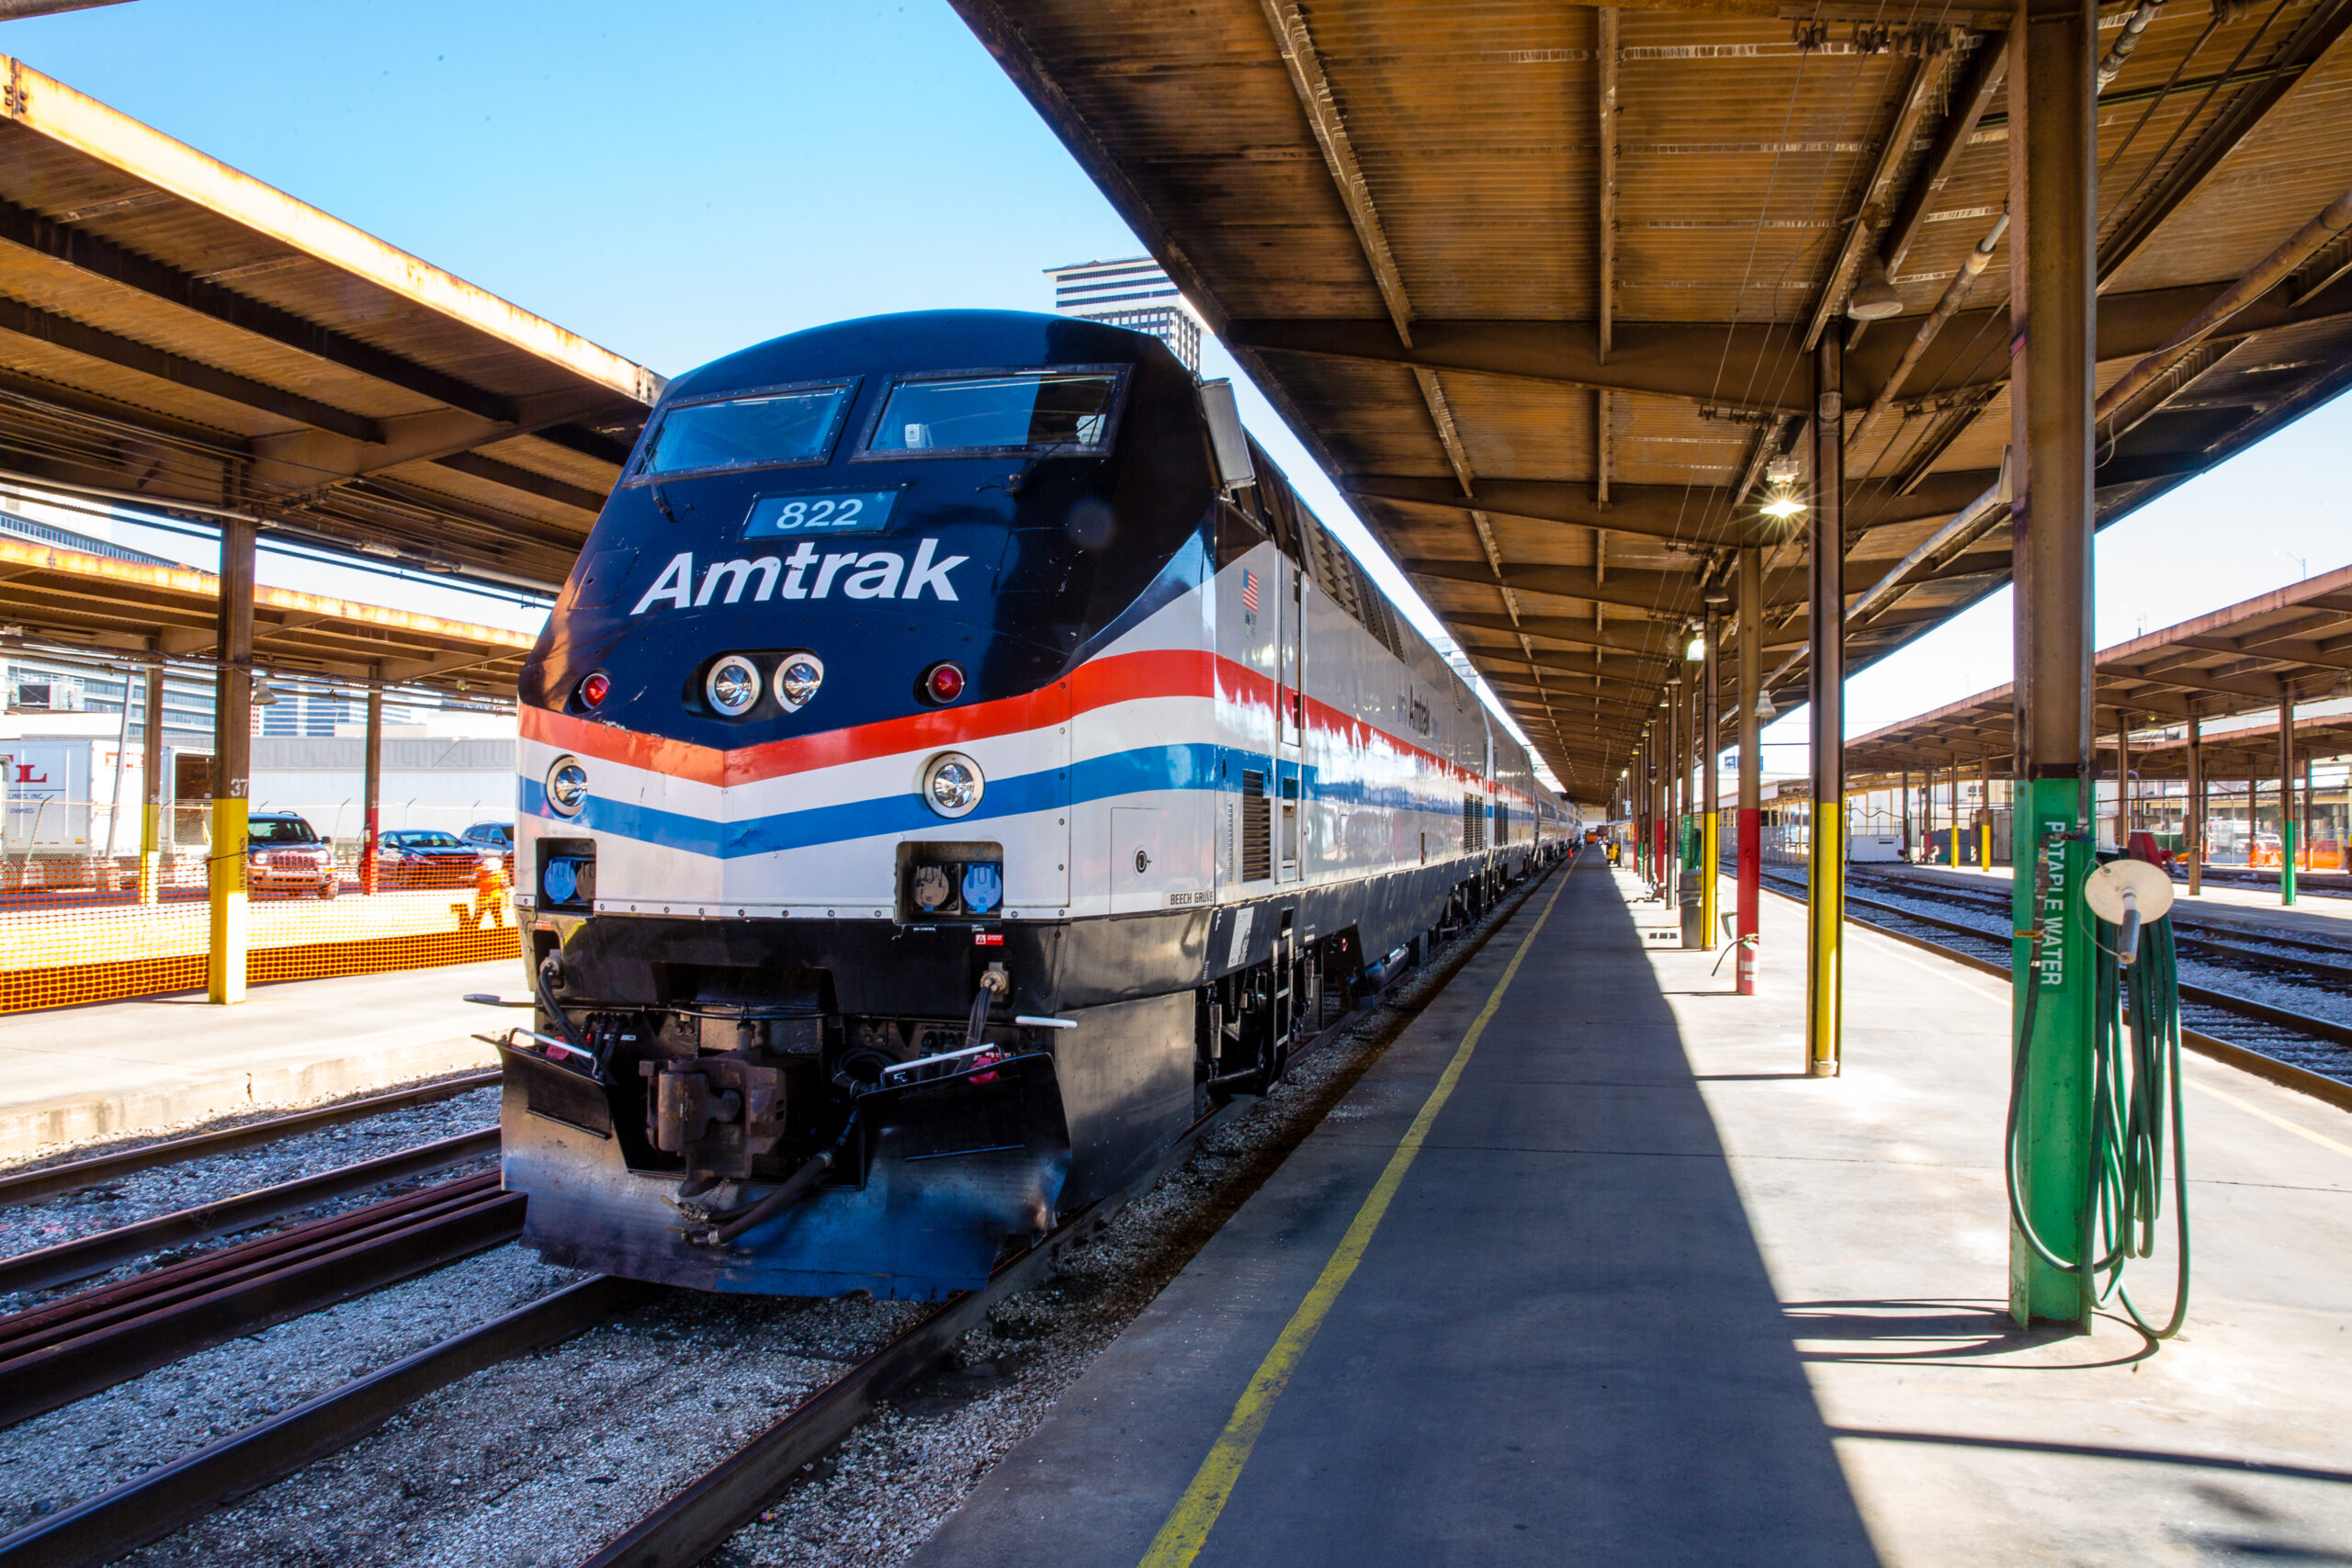 An Amtrak train waits at a station